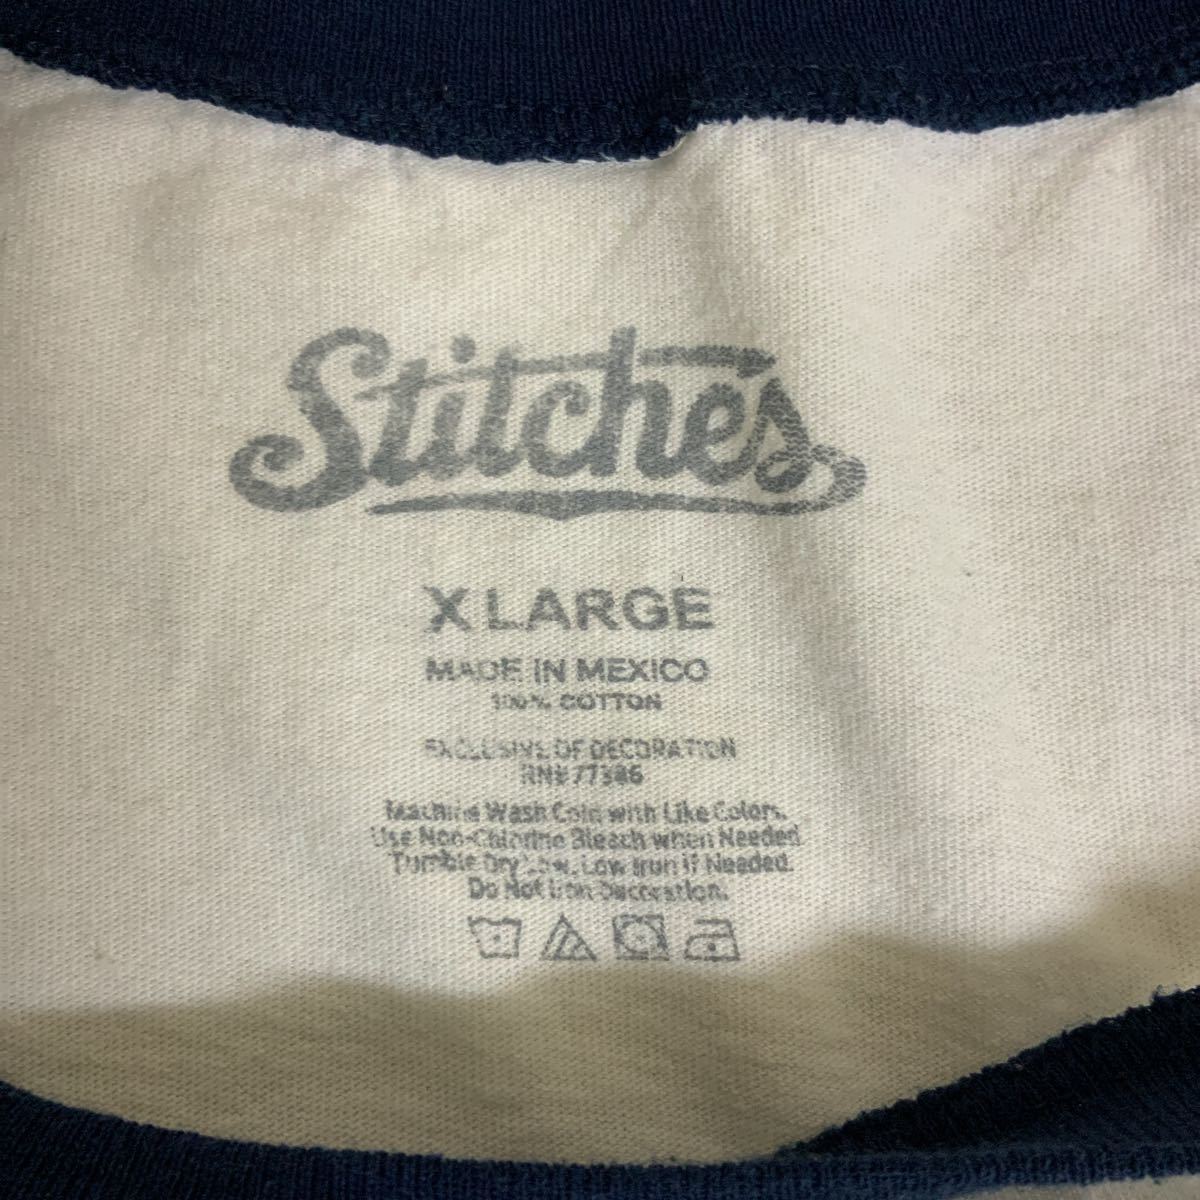 Stitches MLBニューヨークヤンキースラグランTシャツ古着メンズXL